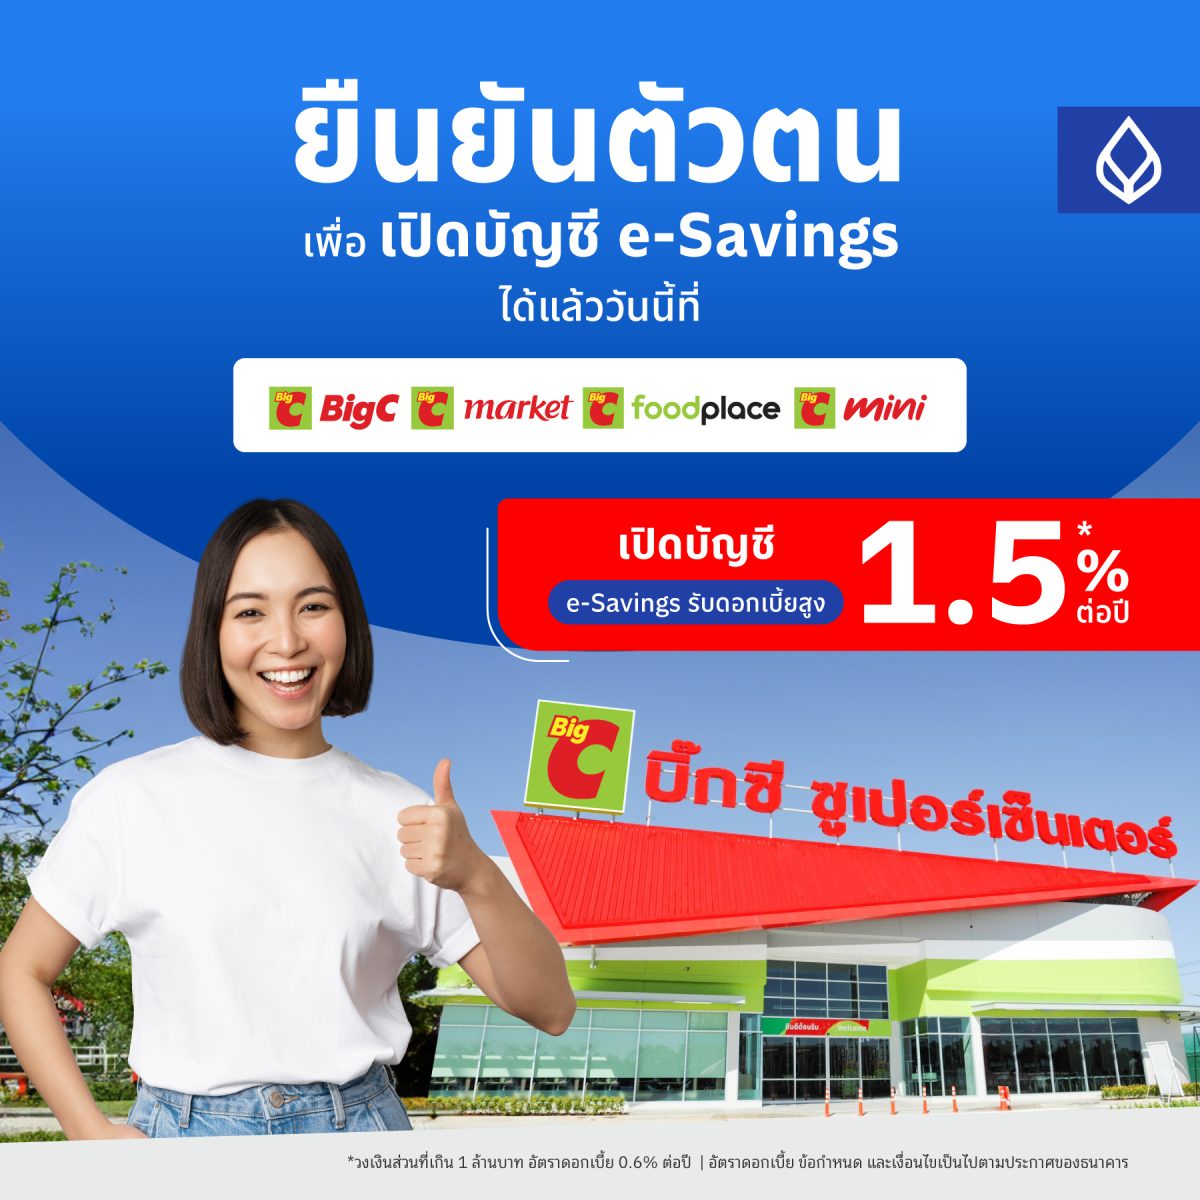 Bangkok Bank expands its Be My ID service at Big C, enabling customers to open savings accounts any time at more than 1,600 Big C branches nationwide